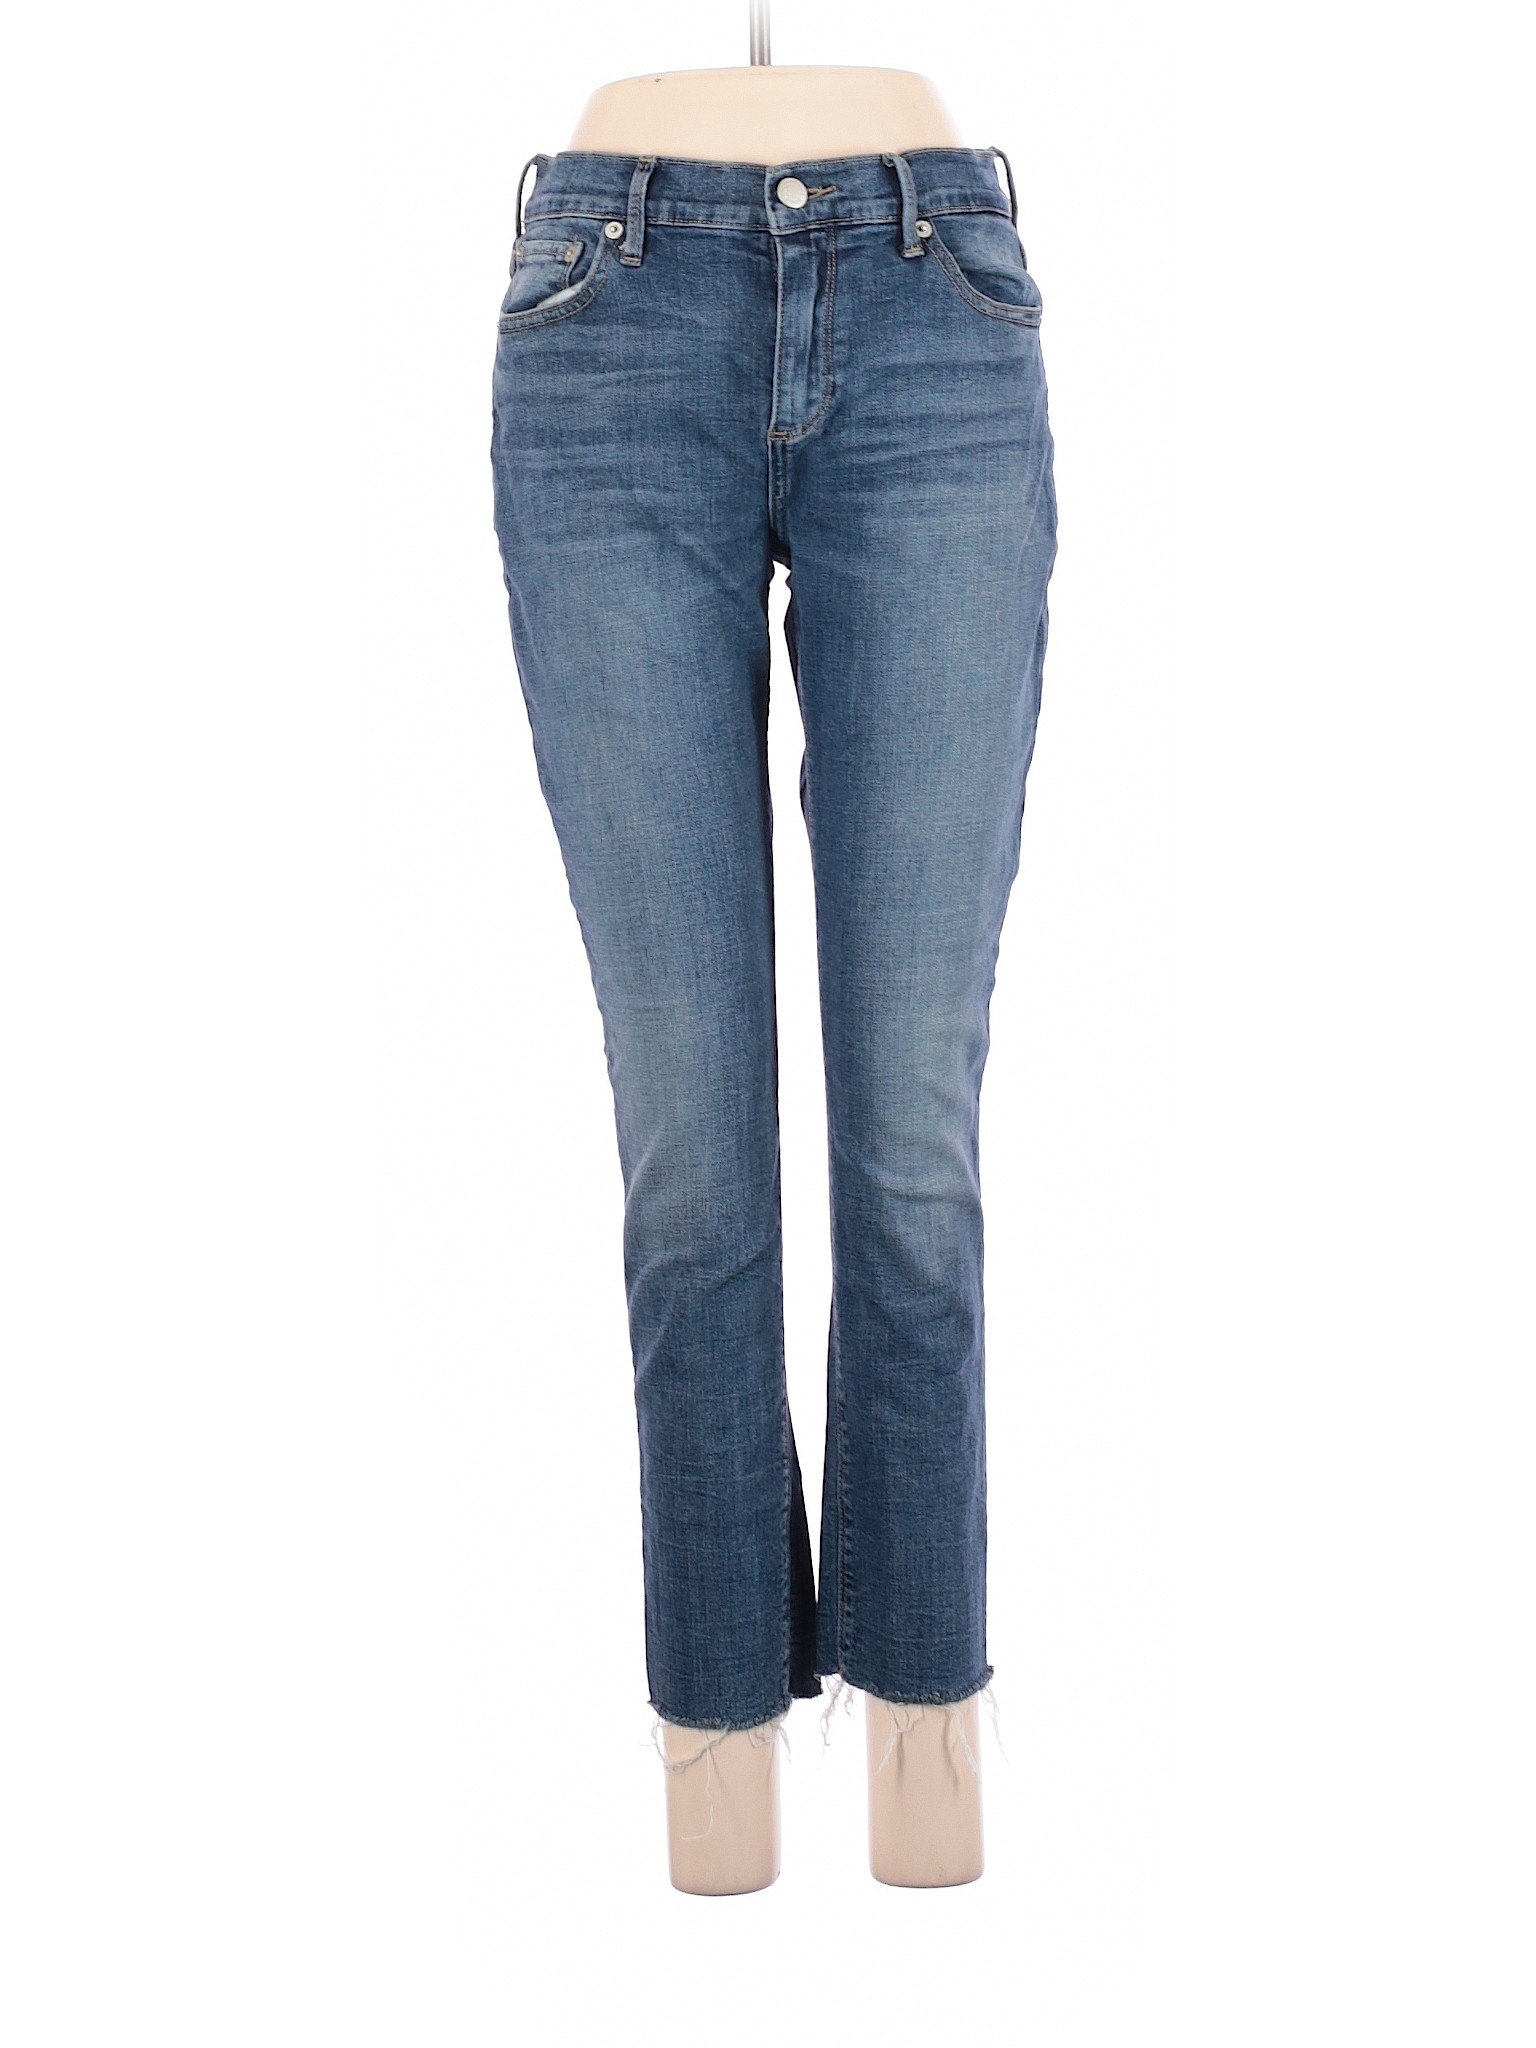 Lucky Brand Women Blue Jeans 8 | eBay